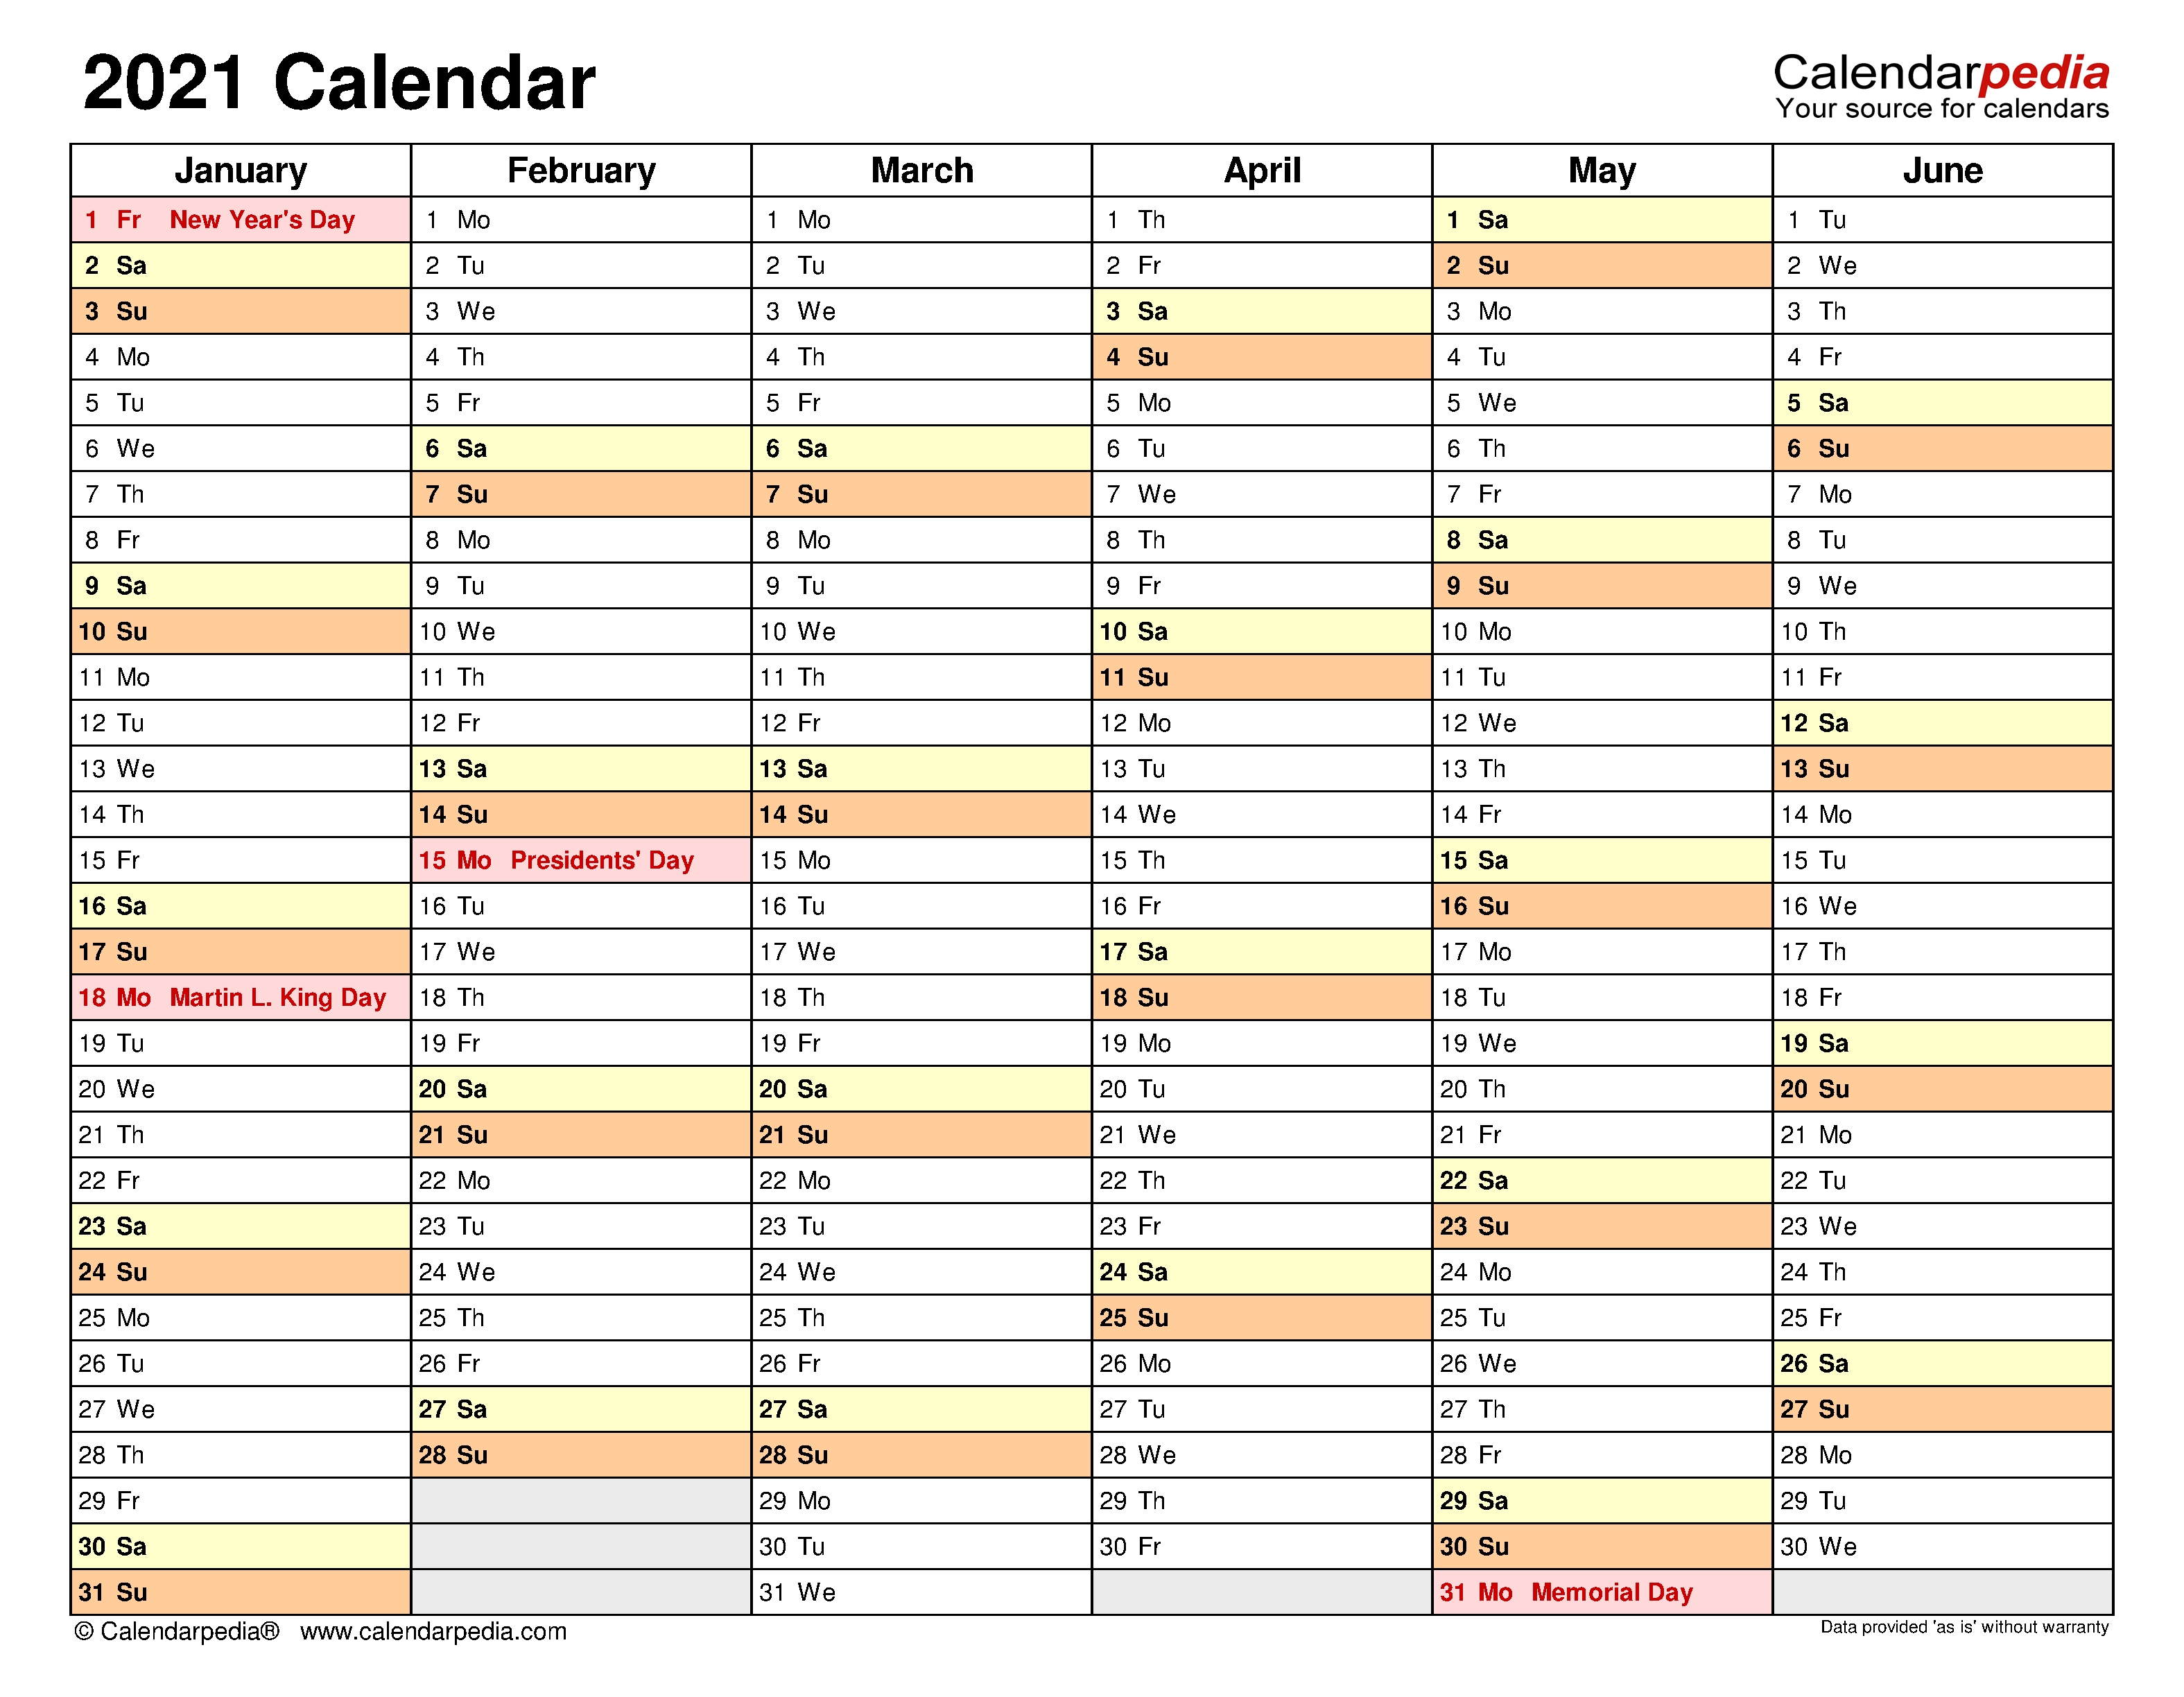 2021 Calendar - Free Printable Excel Templates - Calendarpedia Calendarpedia 2021